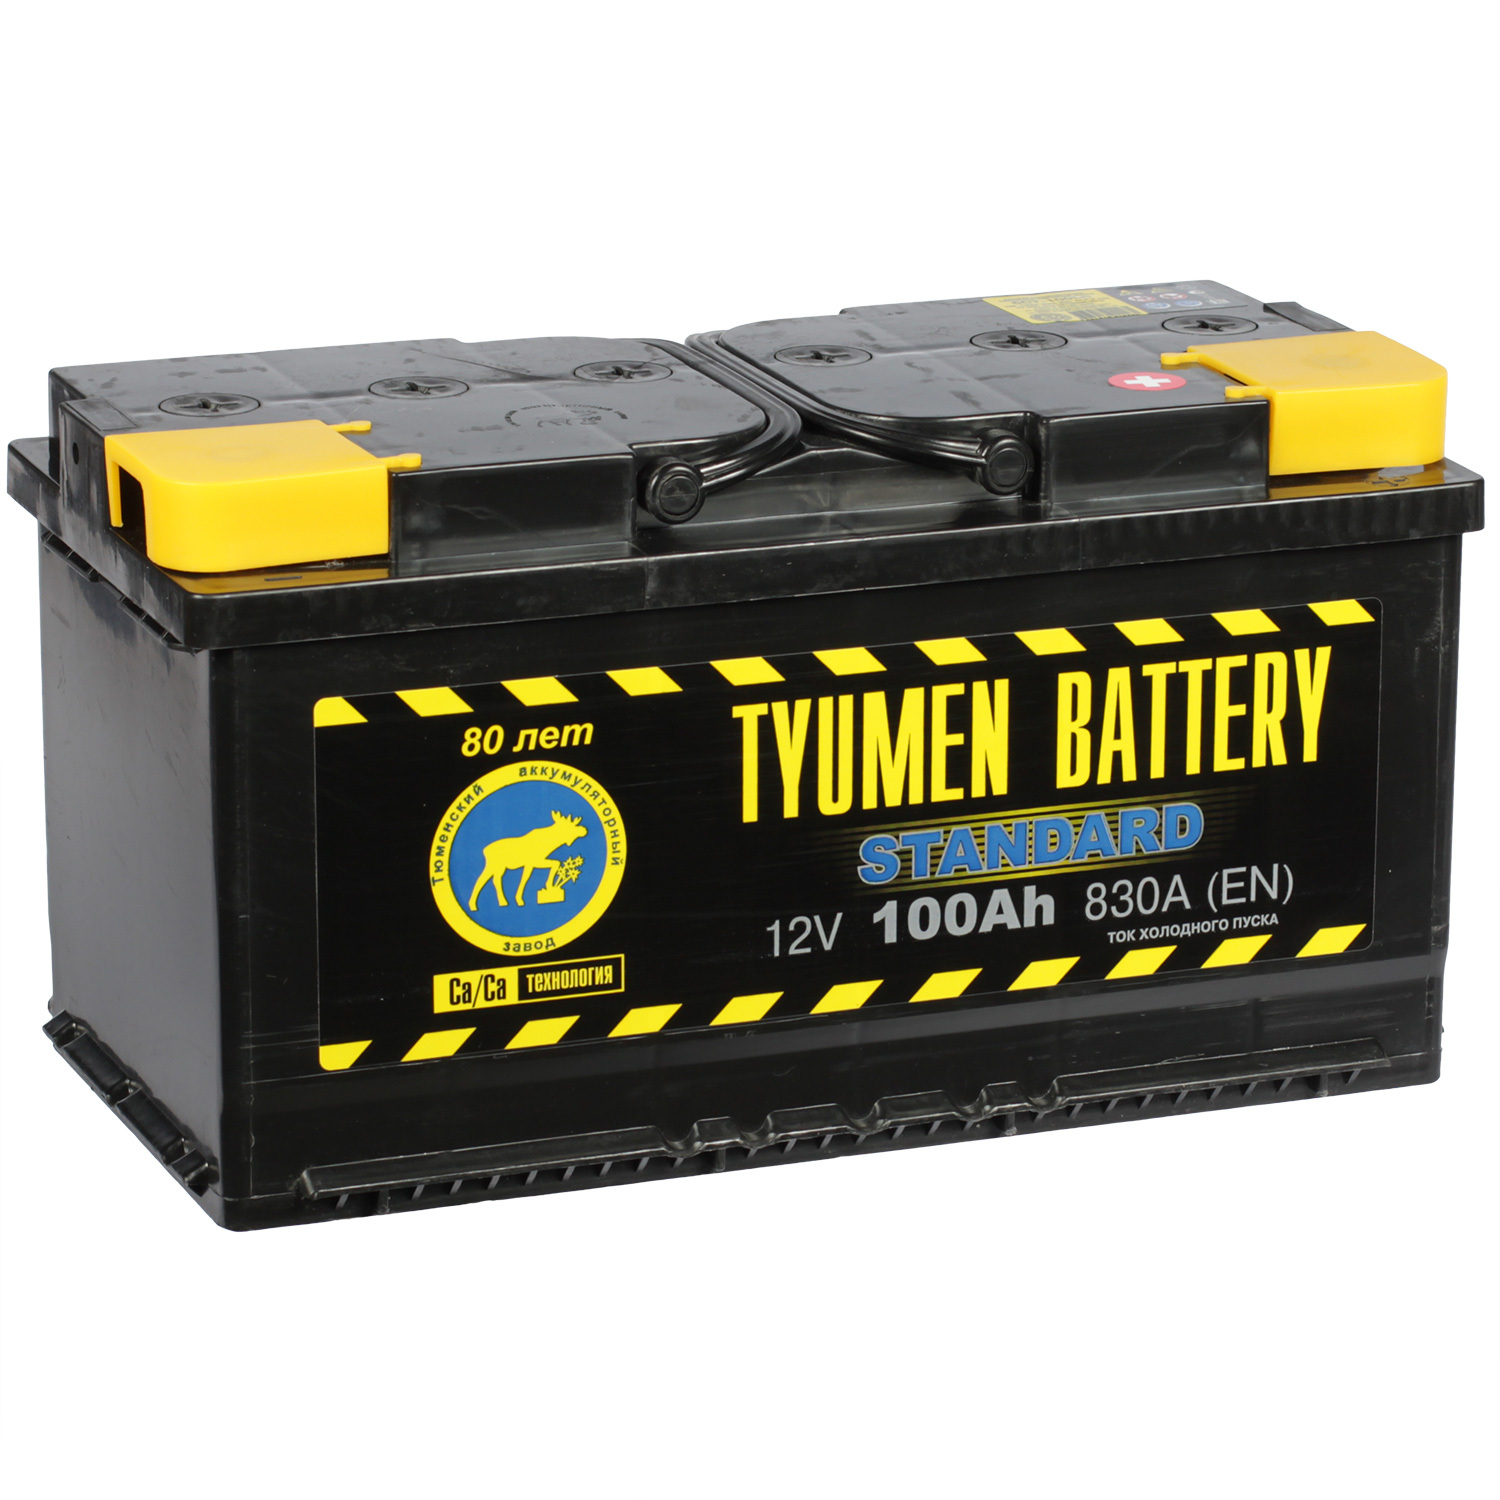 Tyumen Battery Автомобильный аккумулятор Tyumen Battery Standard 100 Ач обратная полярность L5 tyumen battery автомобильный аккумулятор tyumen battery asia 40 ач обратная полярность b19l